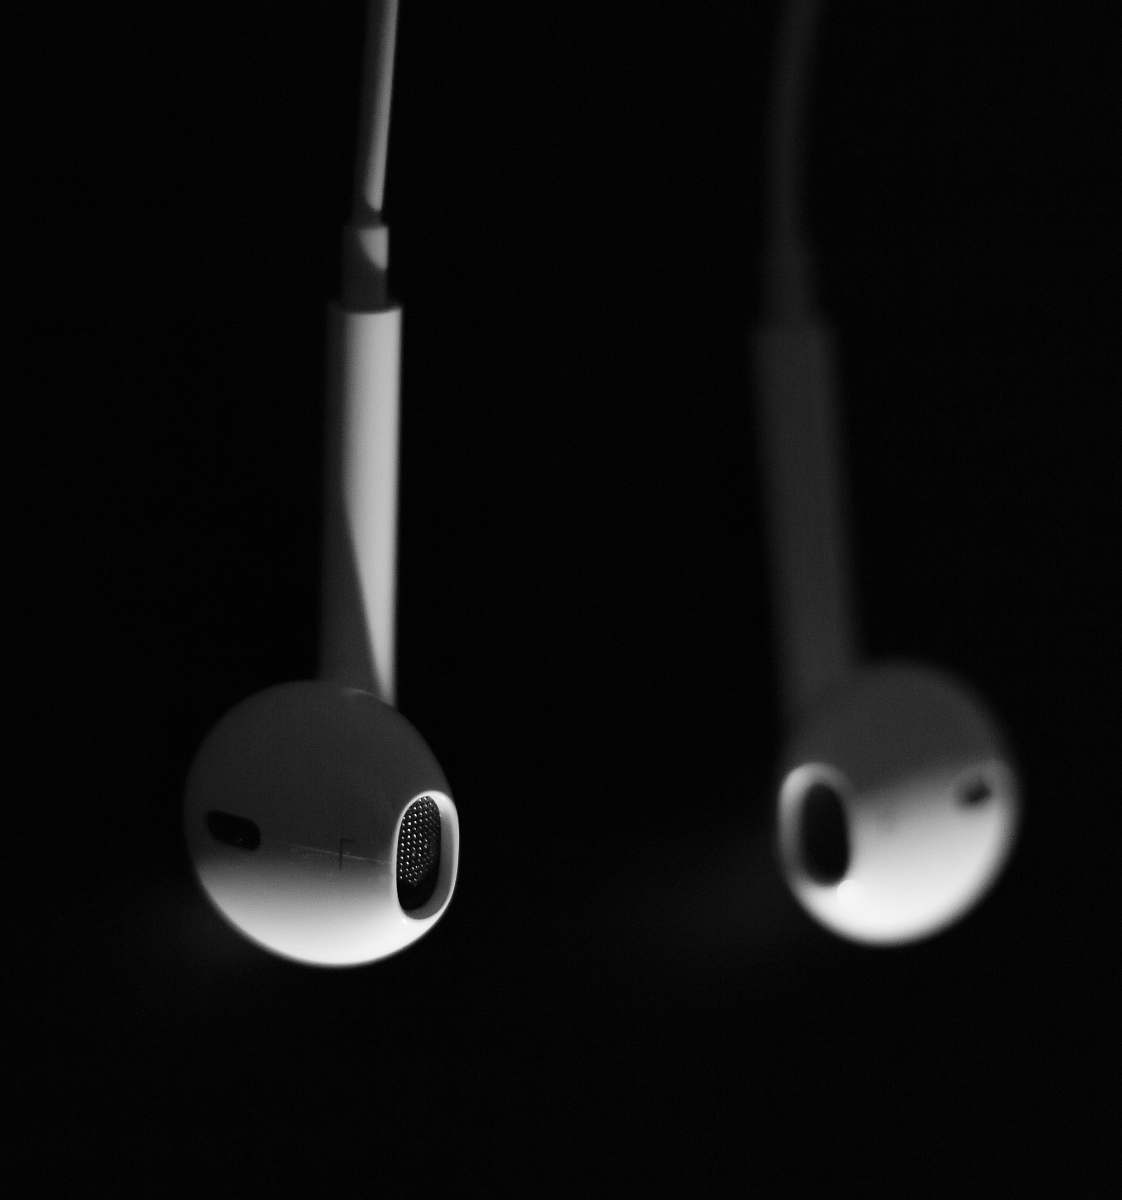 Earphones Apple EarPods Black Background Image Free Photo